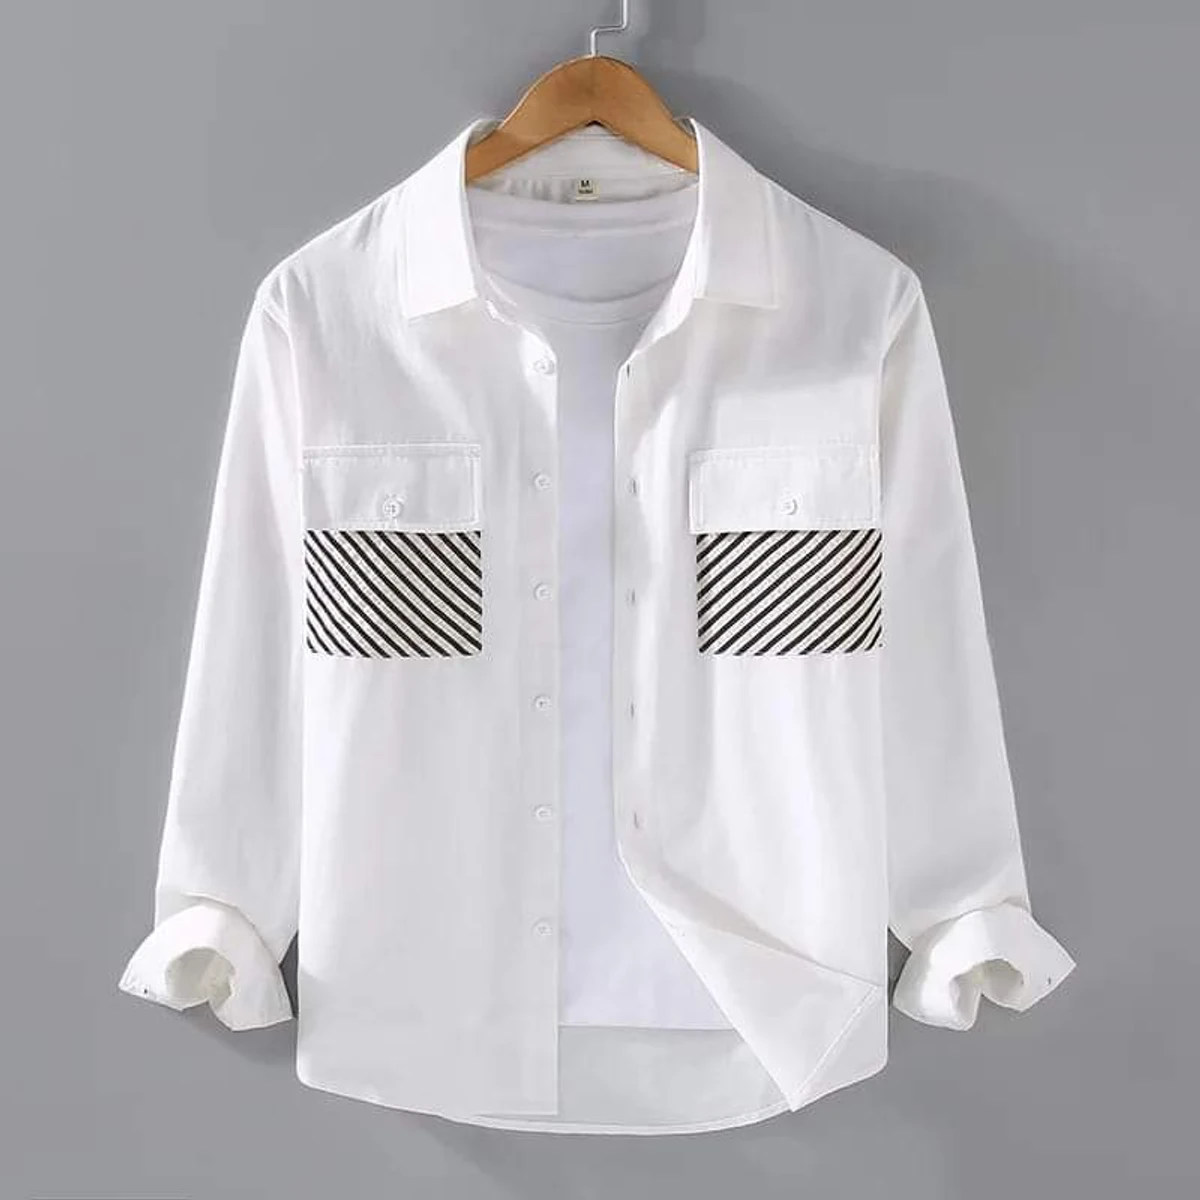 Cotton Rolex Full Sleeve Casual Shirt For Men White-M008